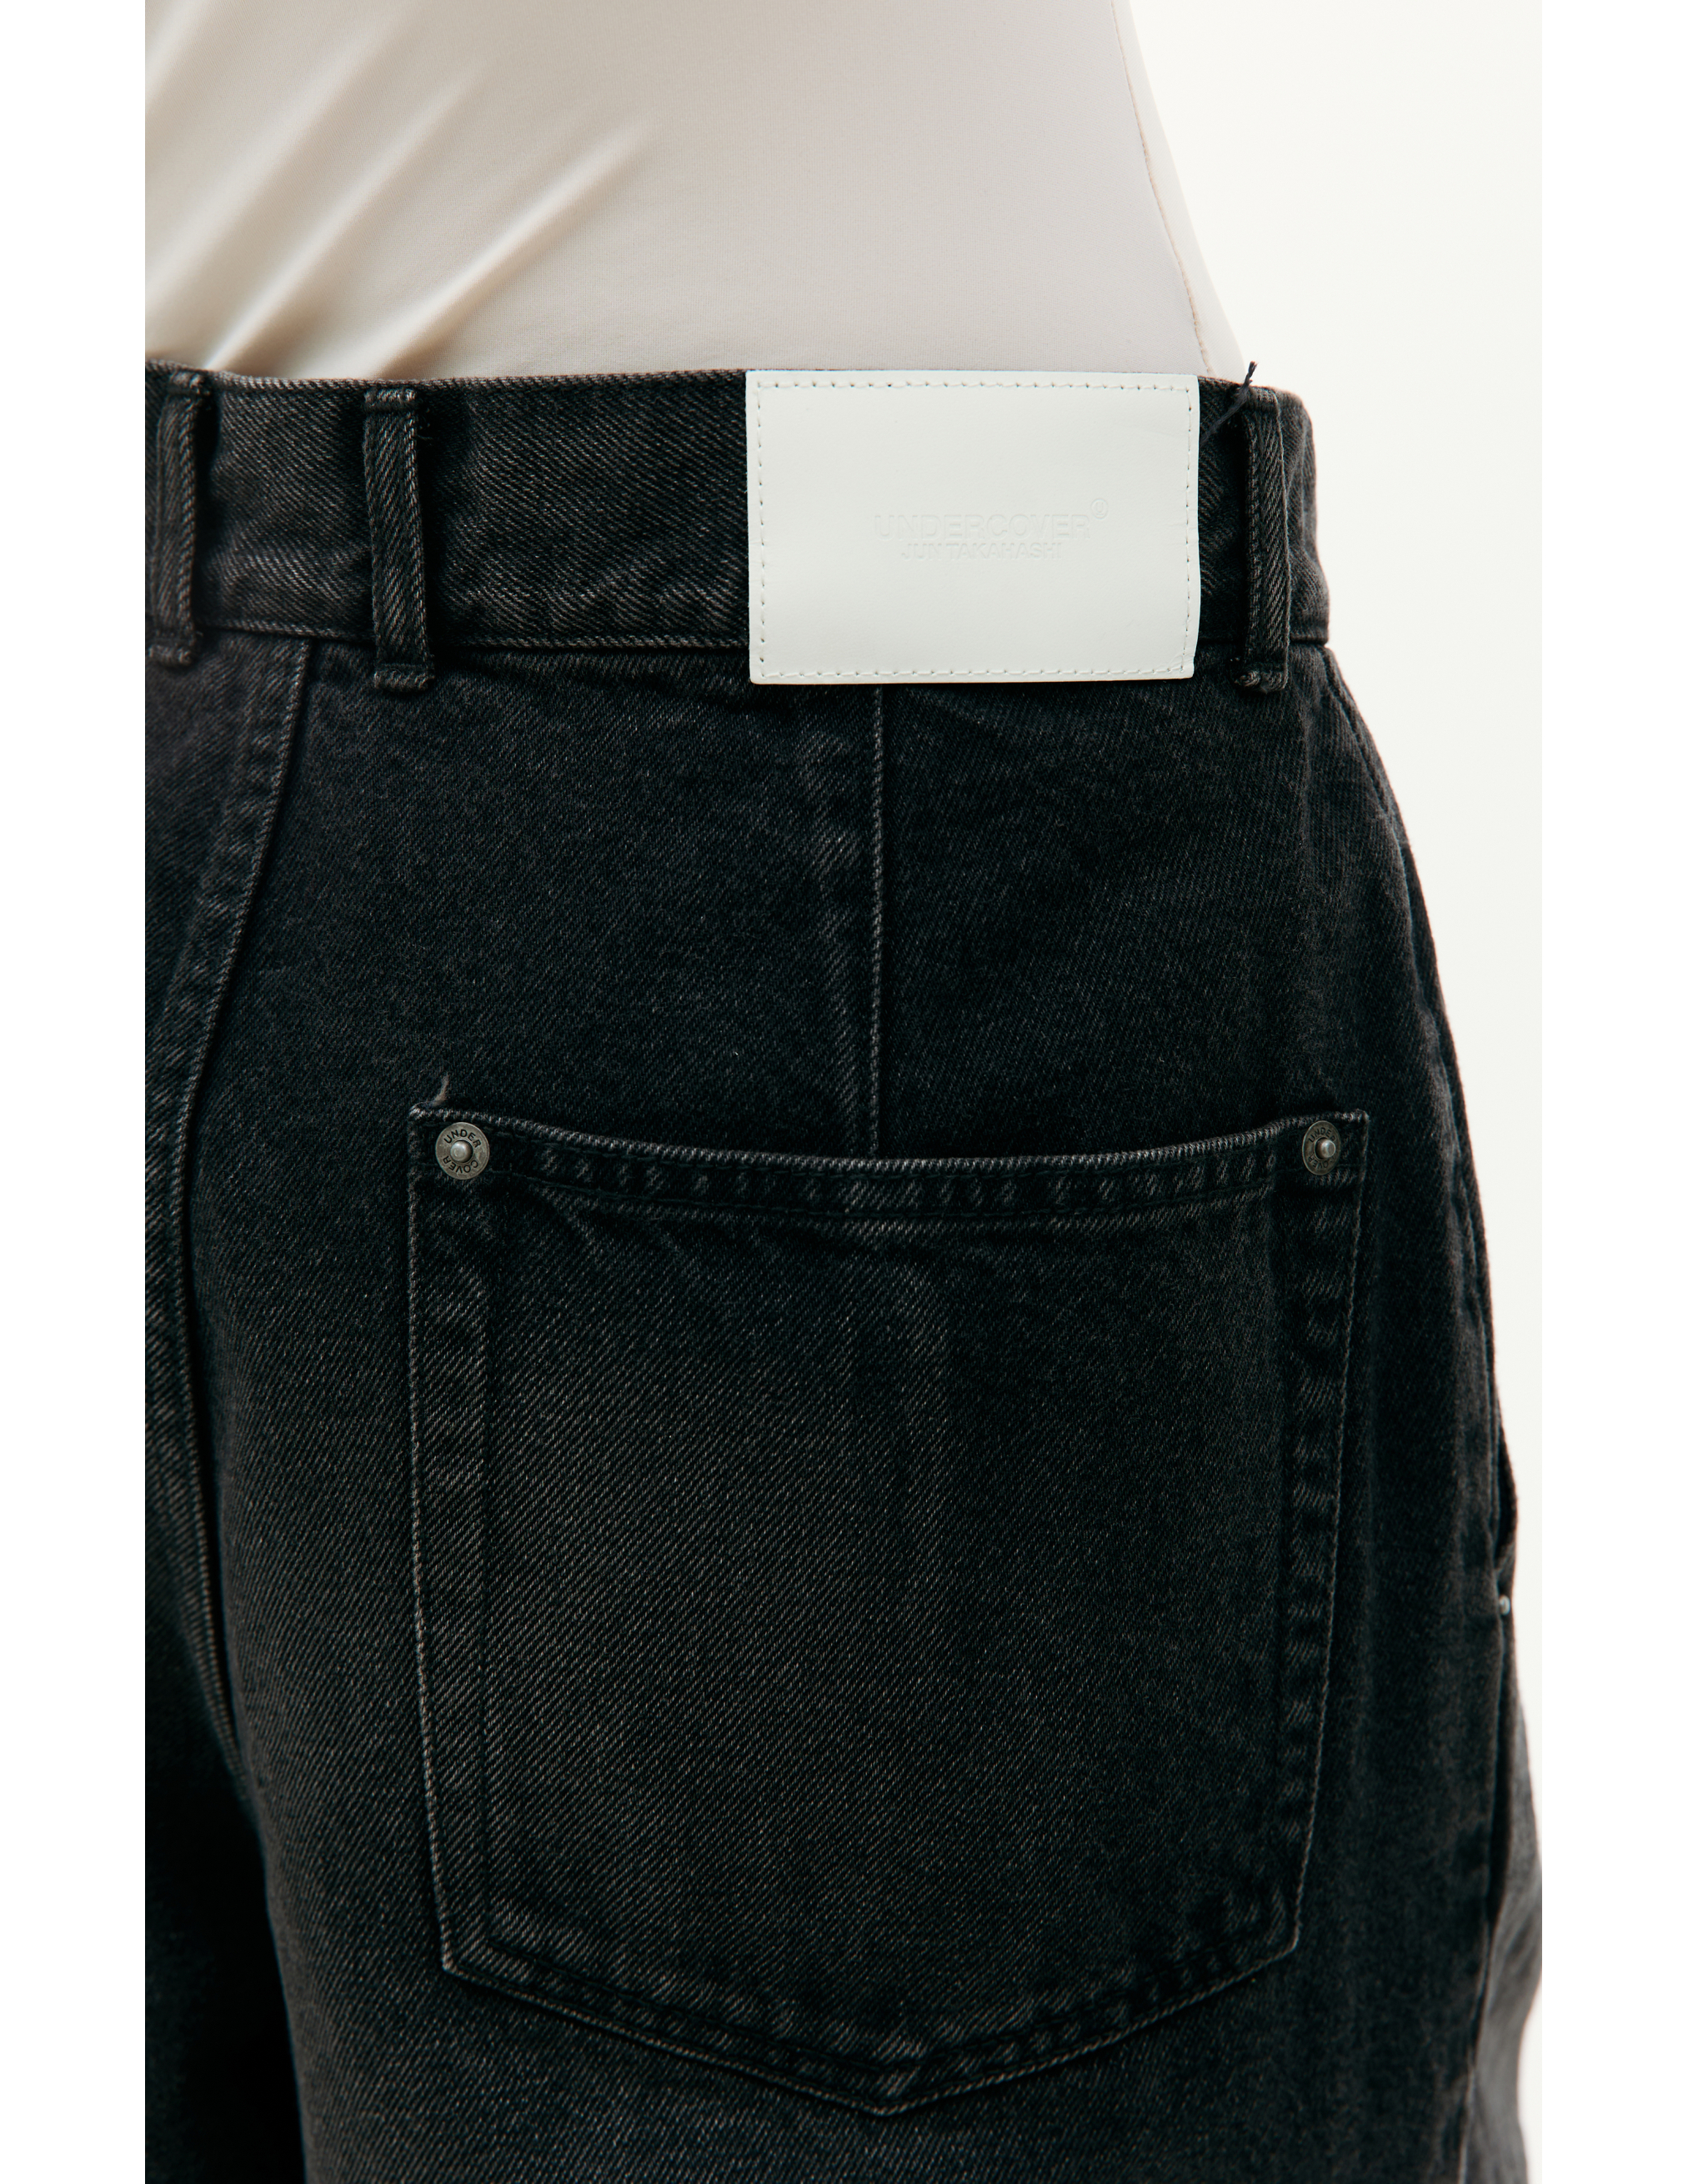 Широкие джинсы с защипами Undercover UC1C1504-2/BLACK, размер 3;4 UC1C1504-2/BLACK - фото 4